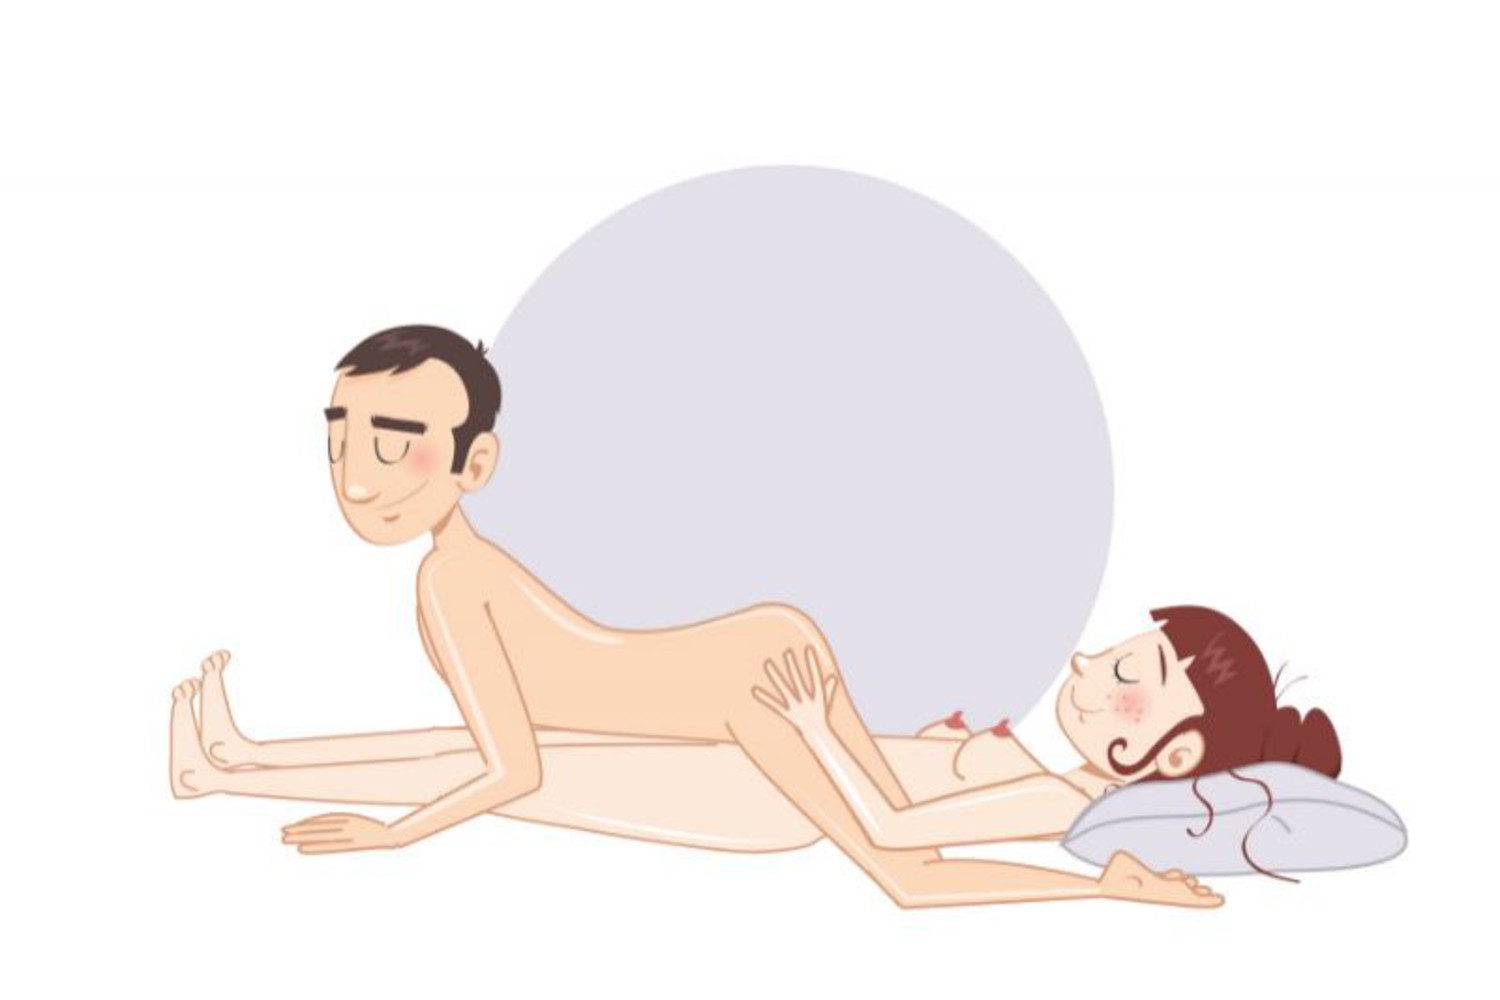 The Propeller Sex Position